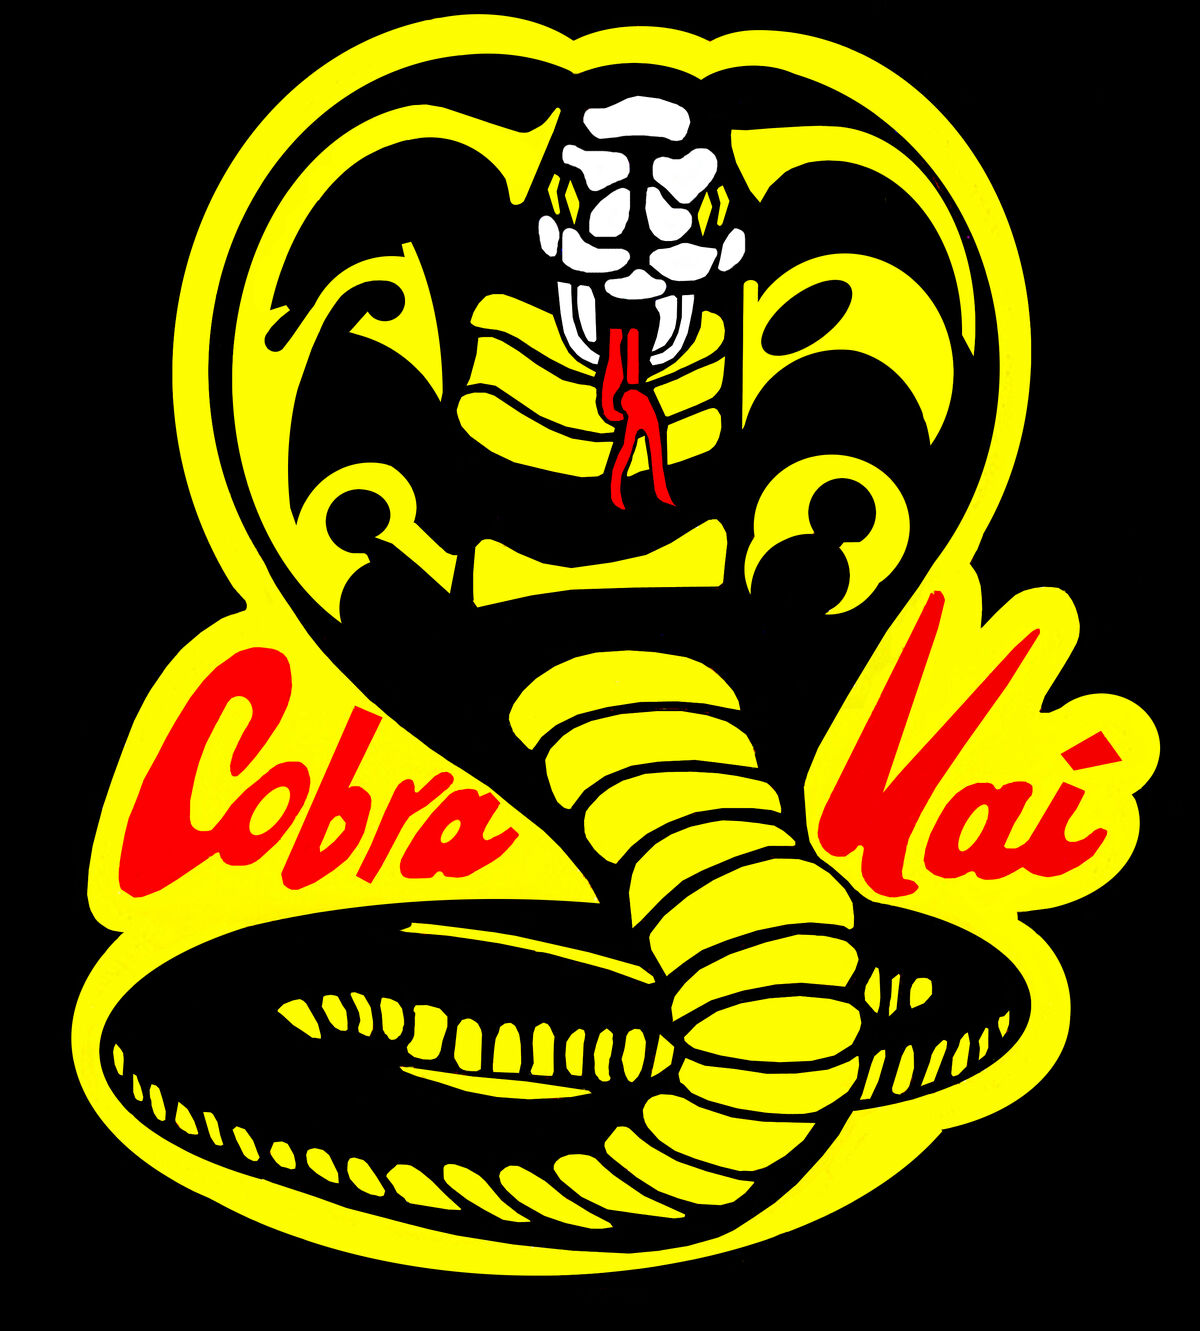 Cobra Kai Ending All Rivalries Was Great, But It Dooms season 6